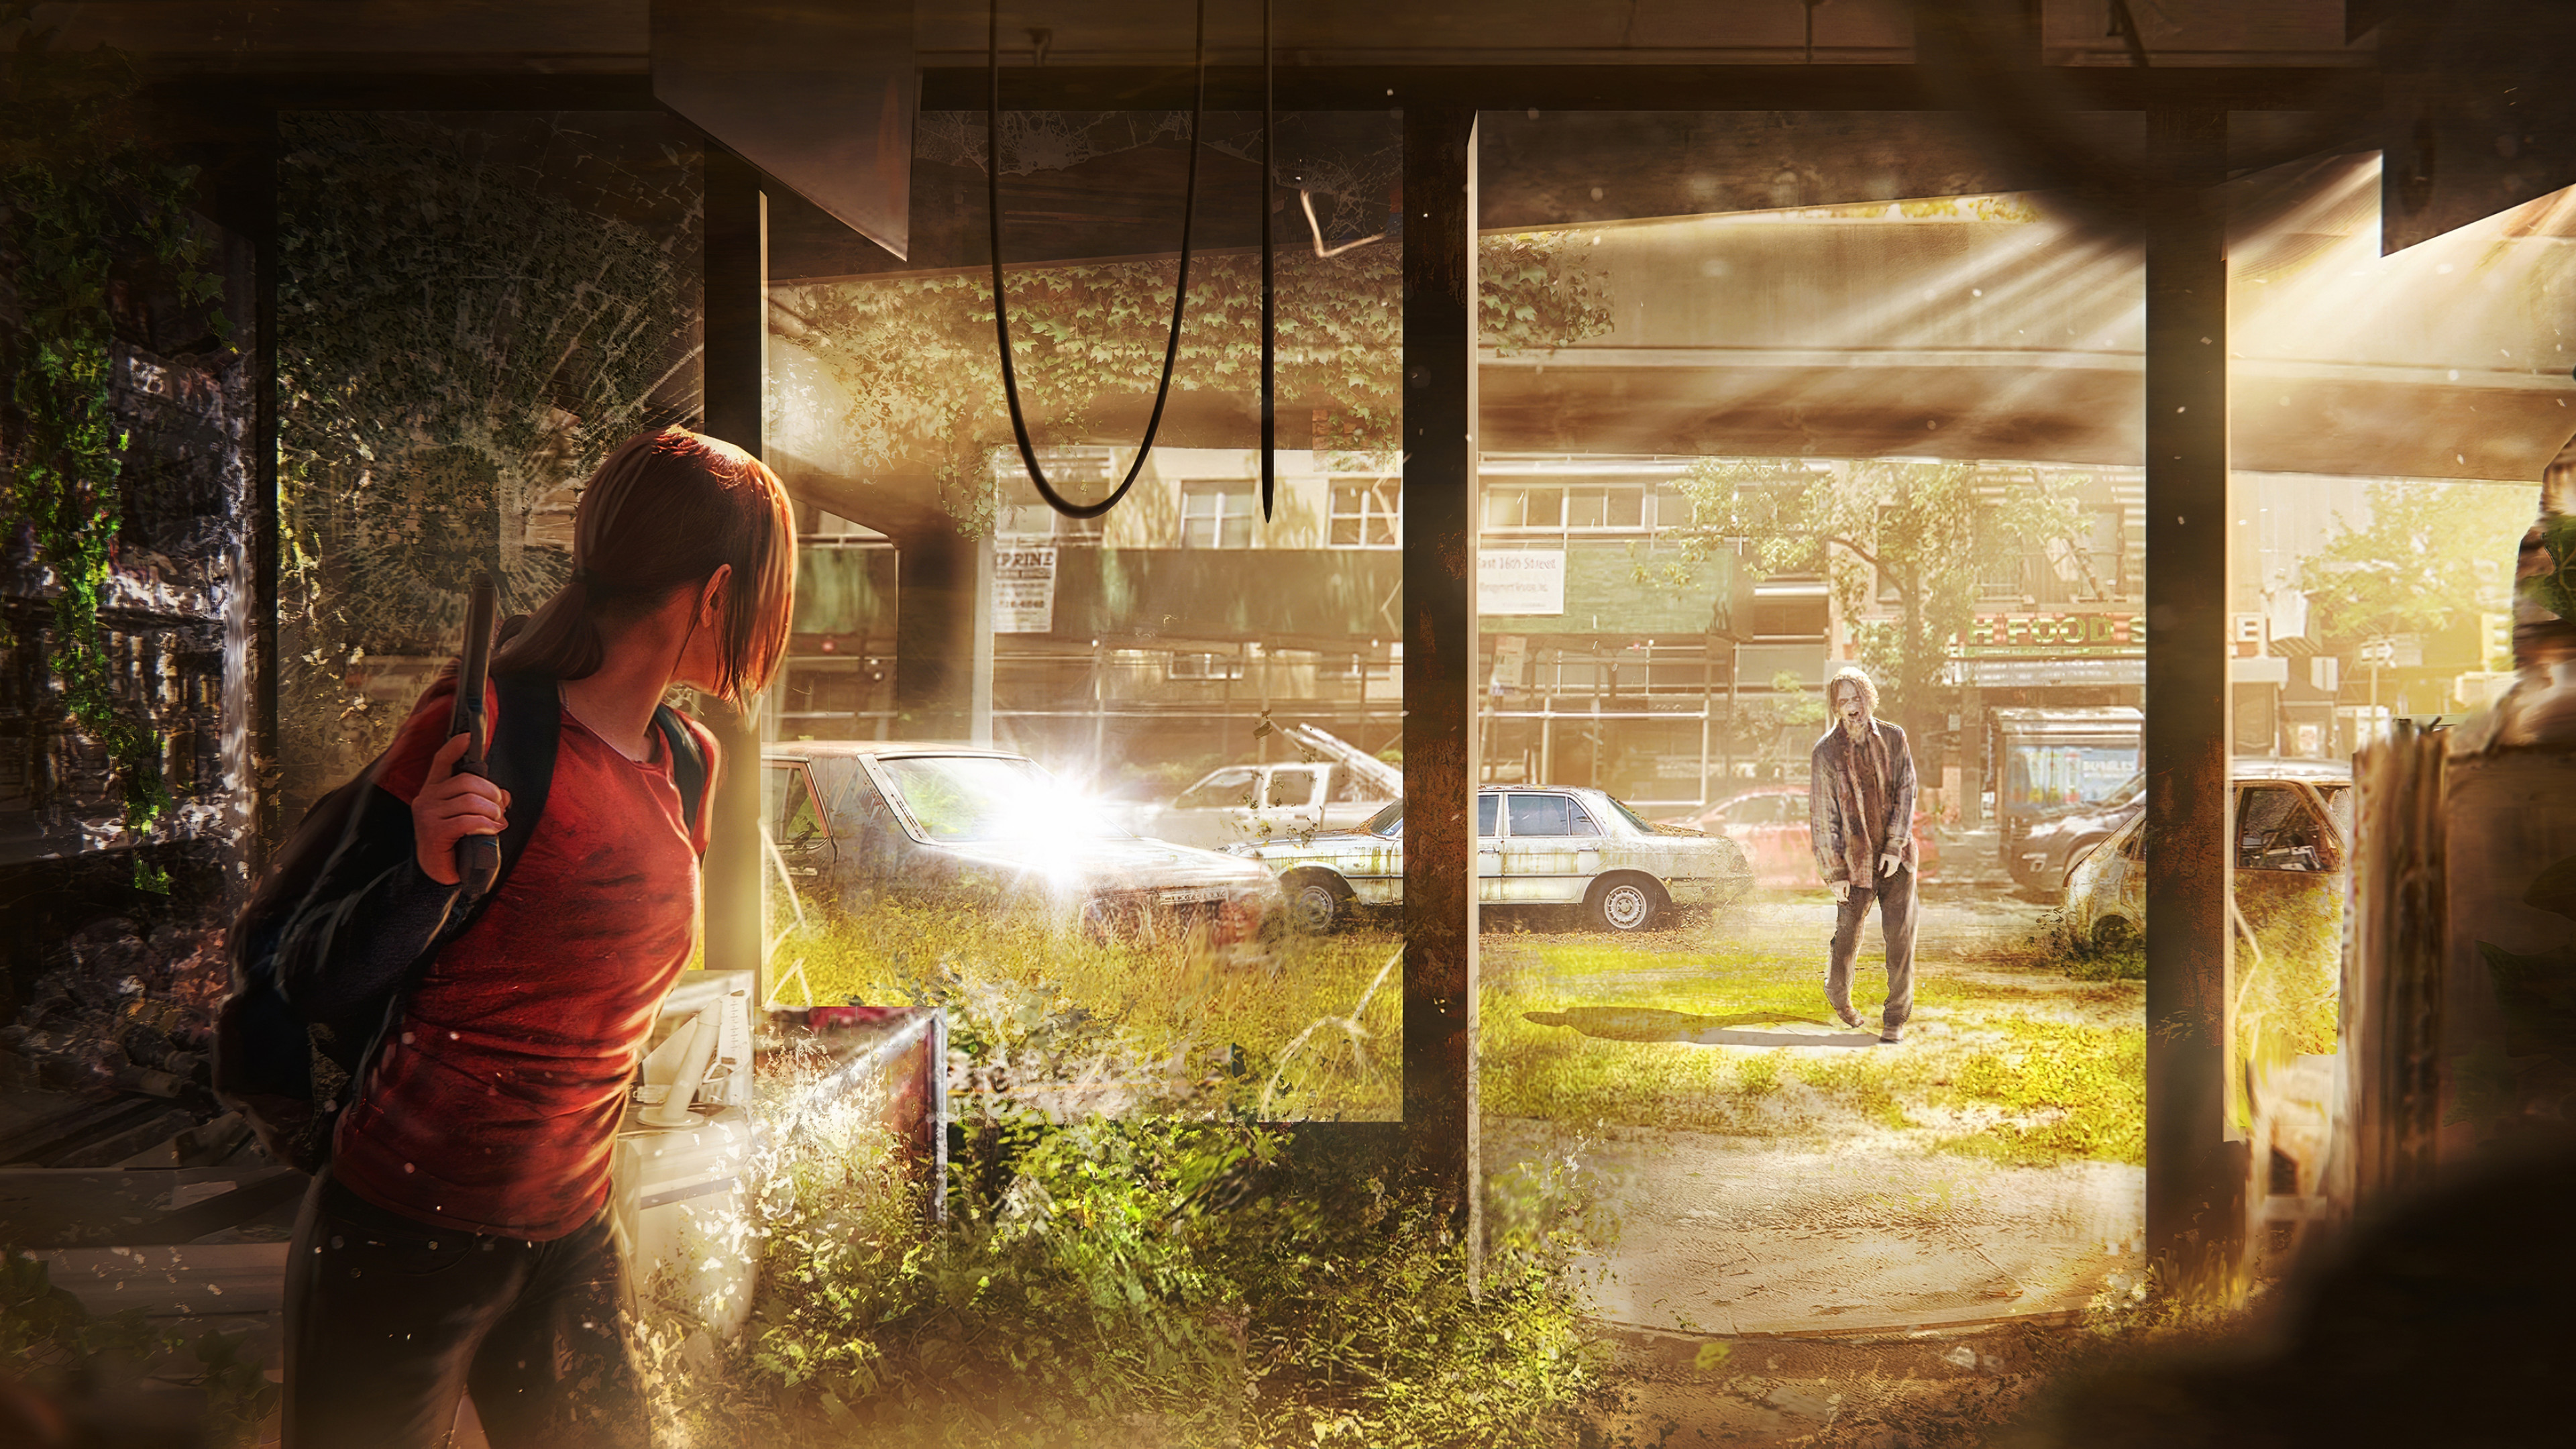 Ellie The Last Of Us Part 2 4k Wallpaper,HD Games Wallpapers,4k